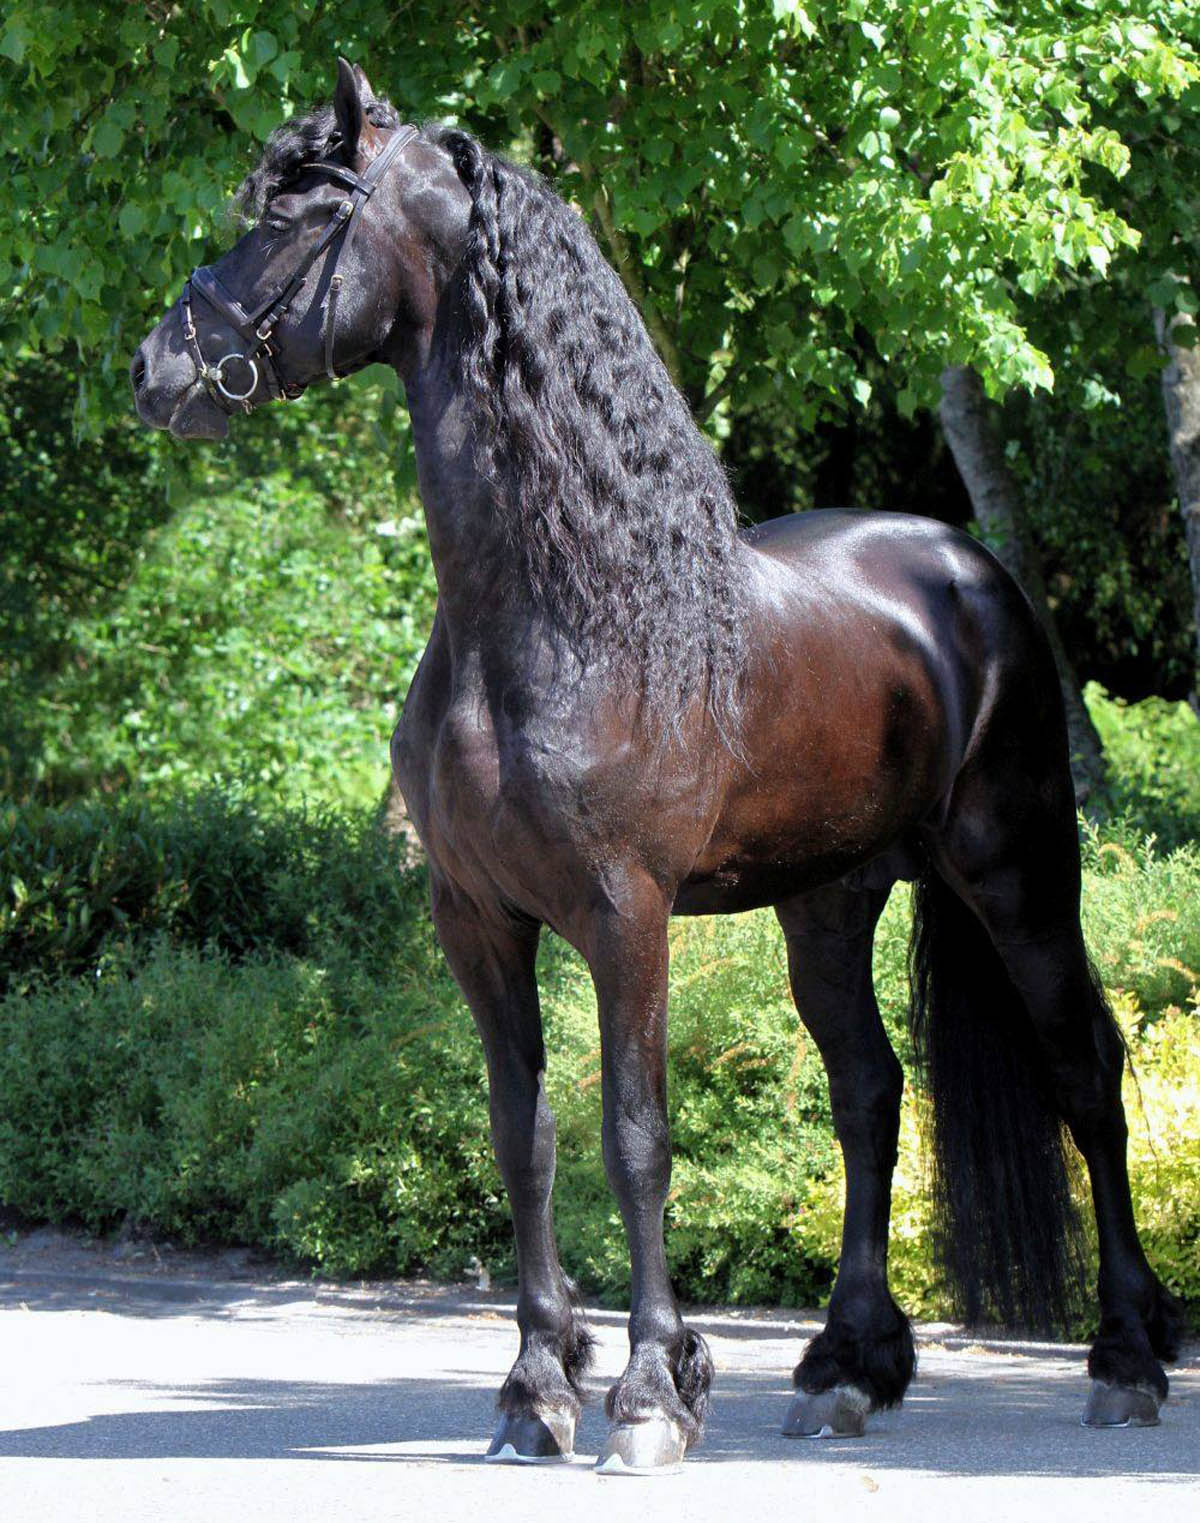 The KFPS Royal Friesian Horse